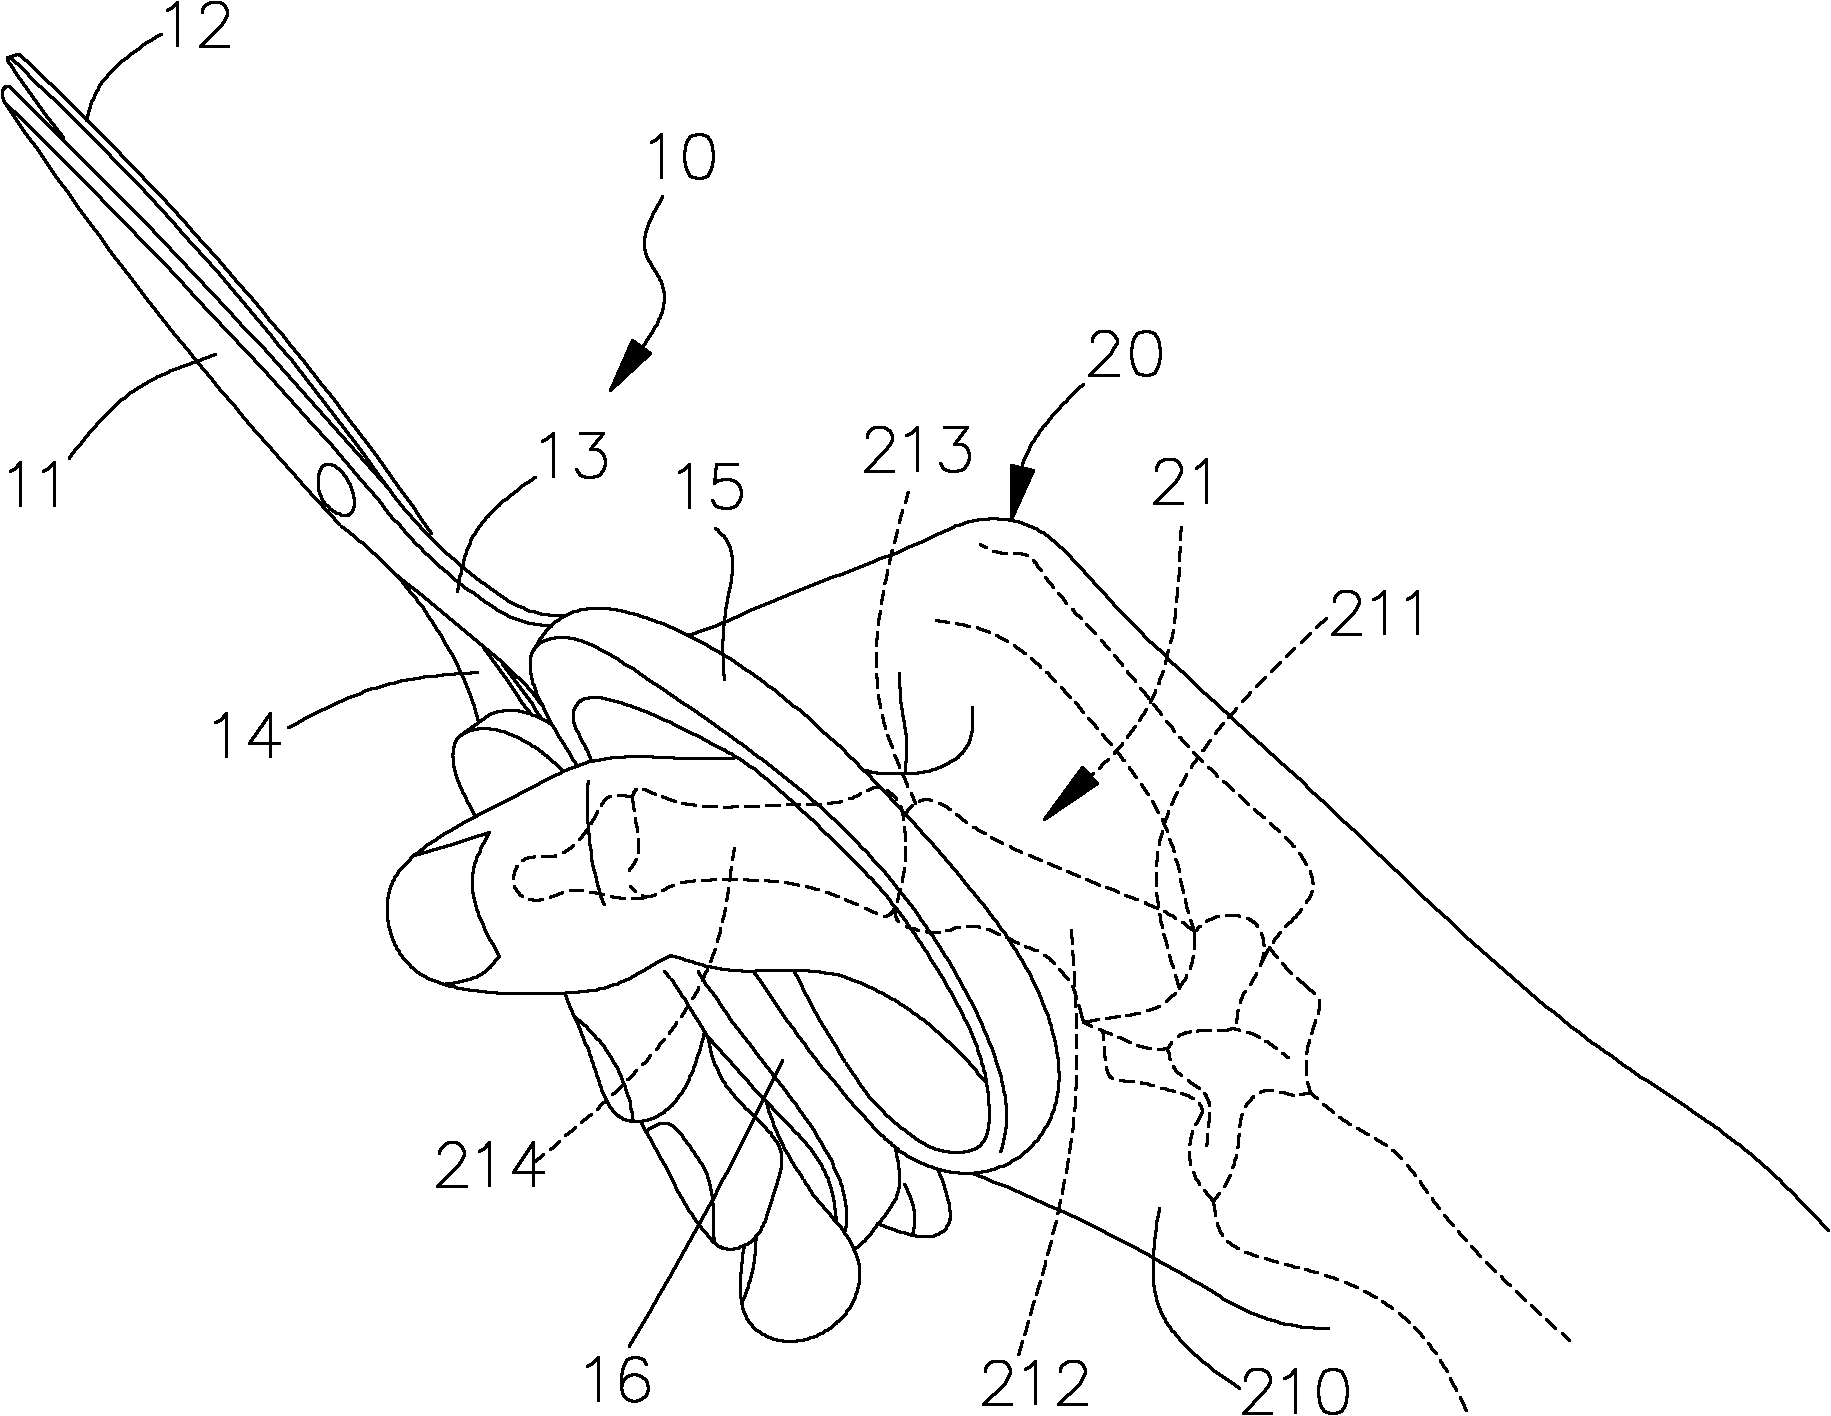 Scissors holding structure